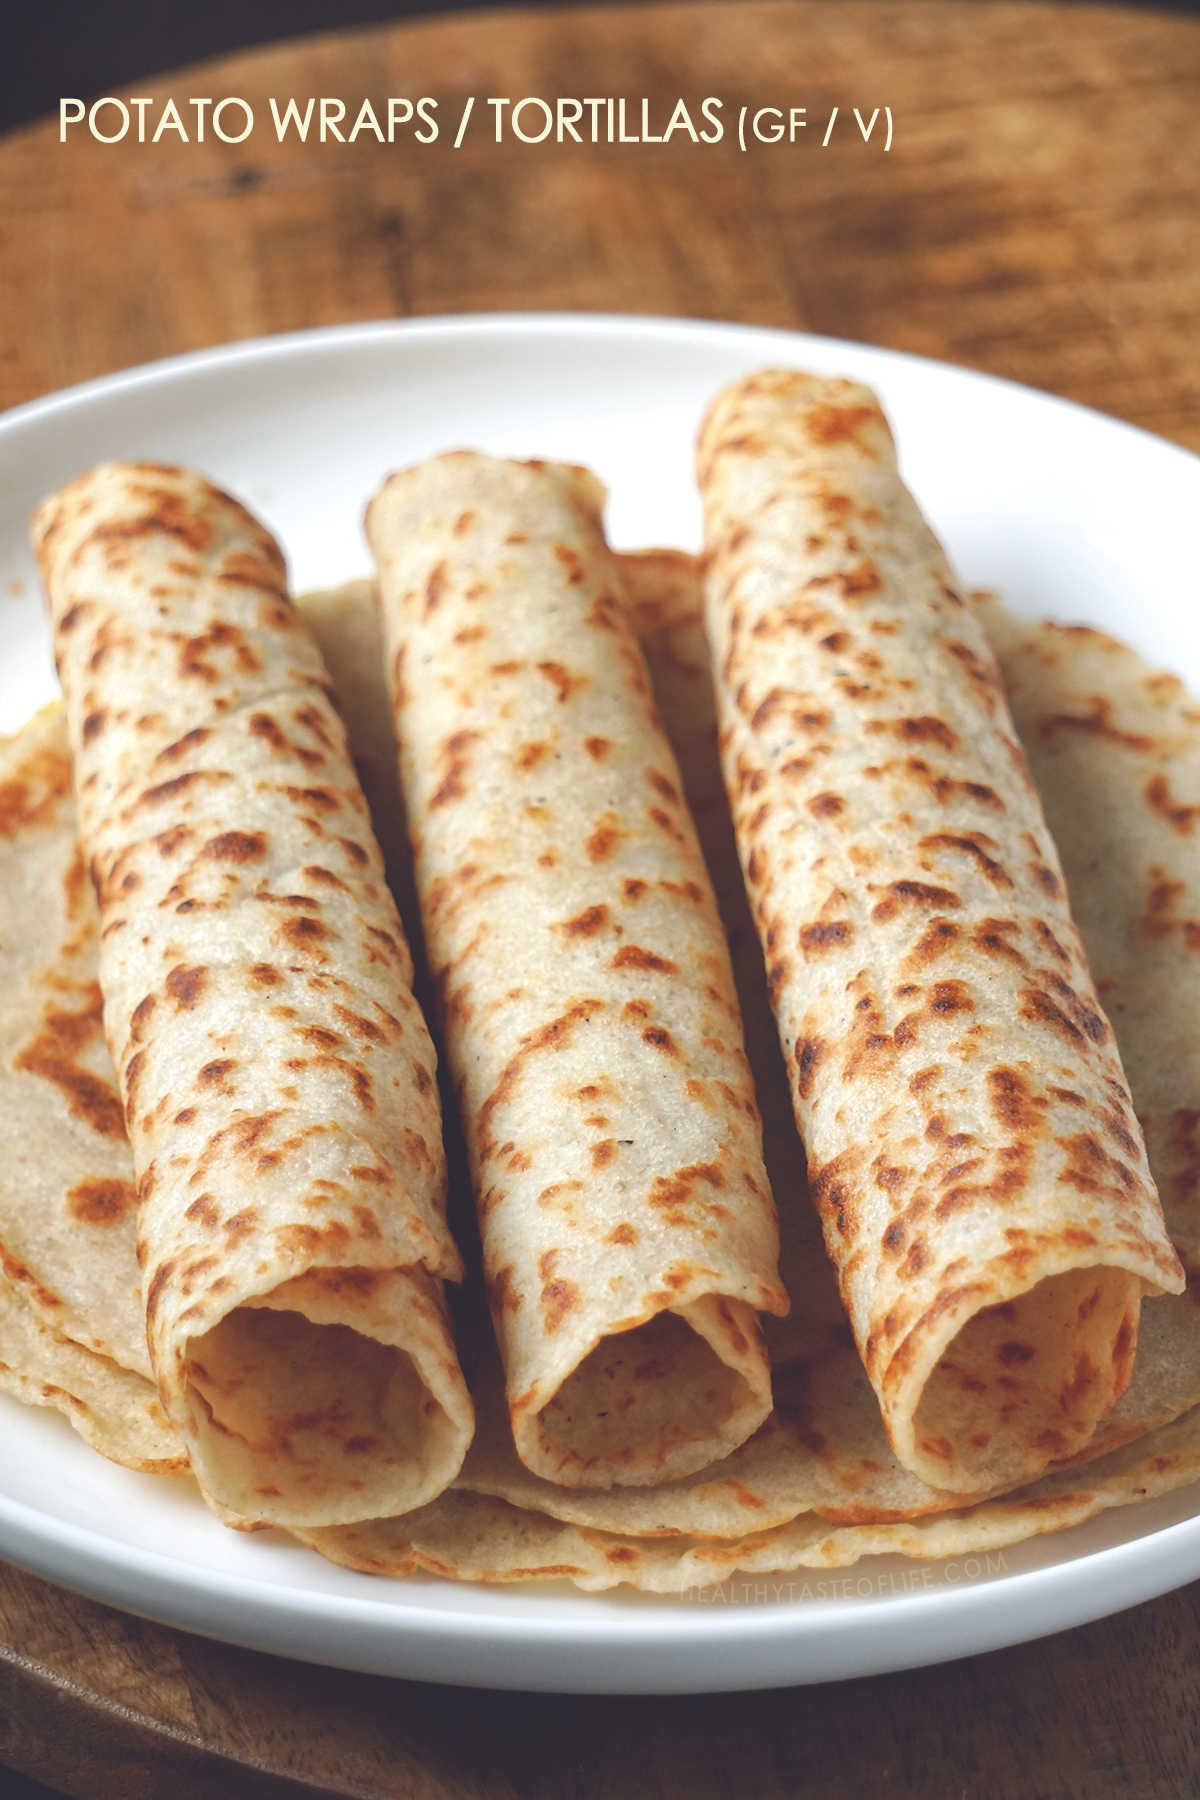 Potato wraps tortillas rolled up to show flexibility - vegan and gluten free recipe.